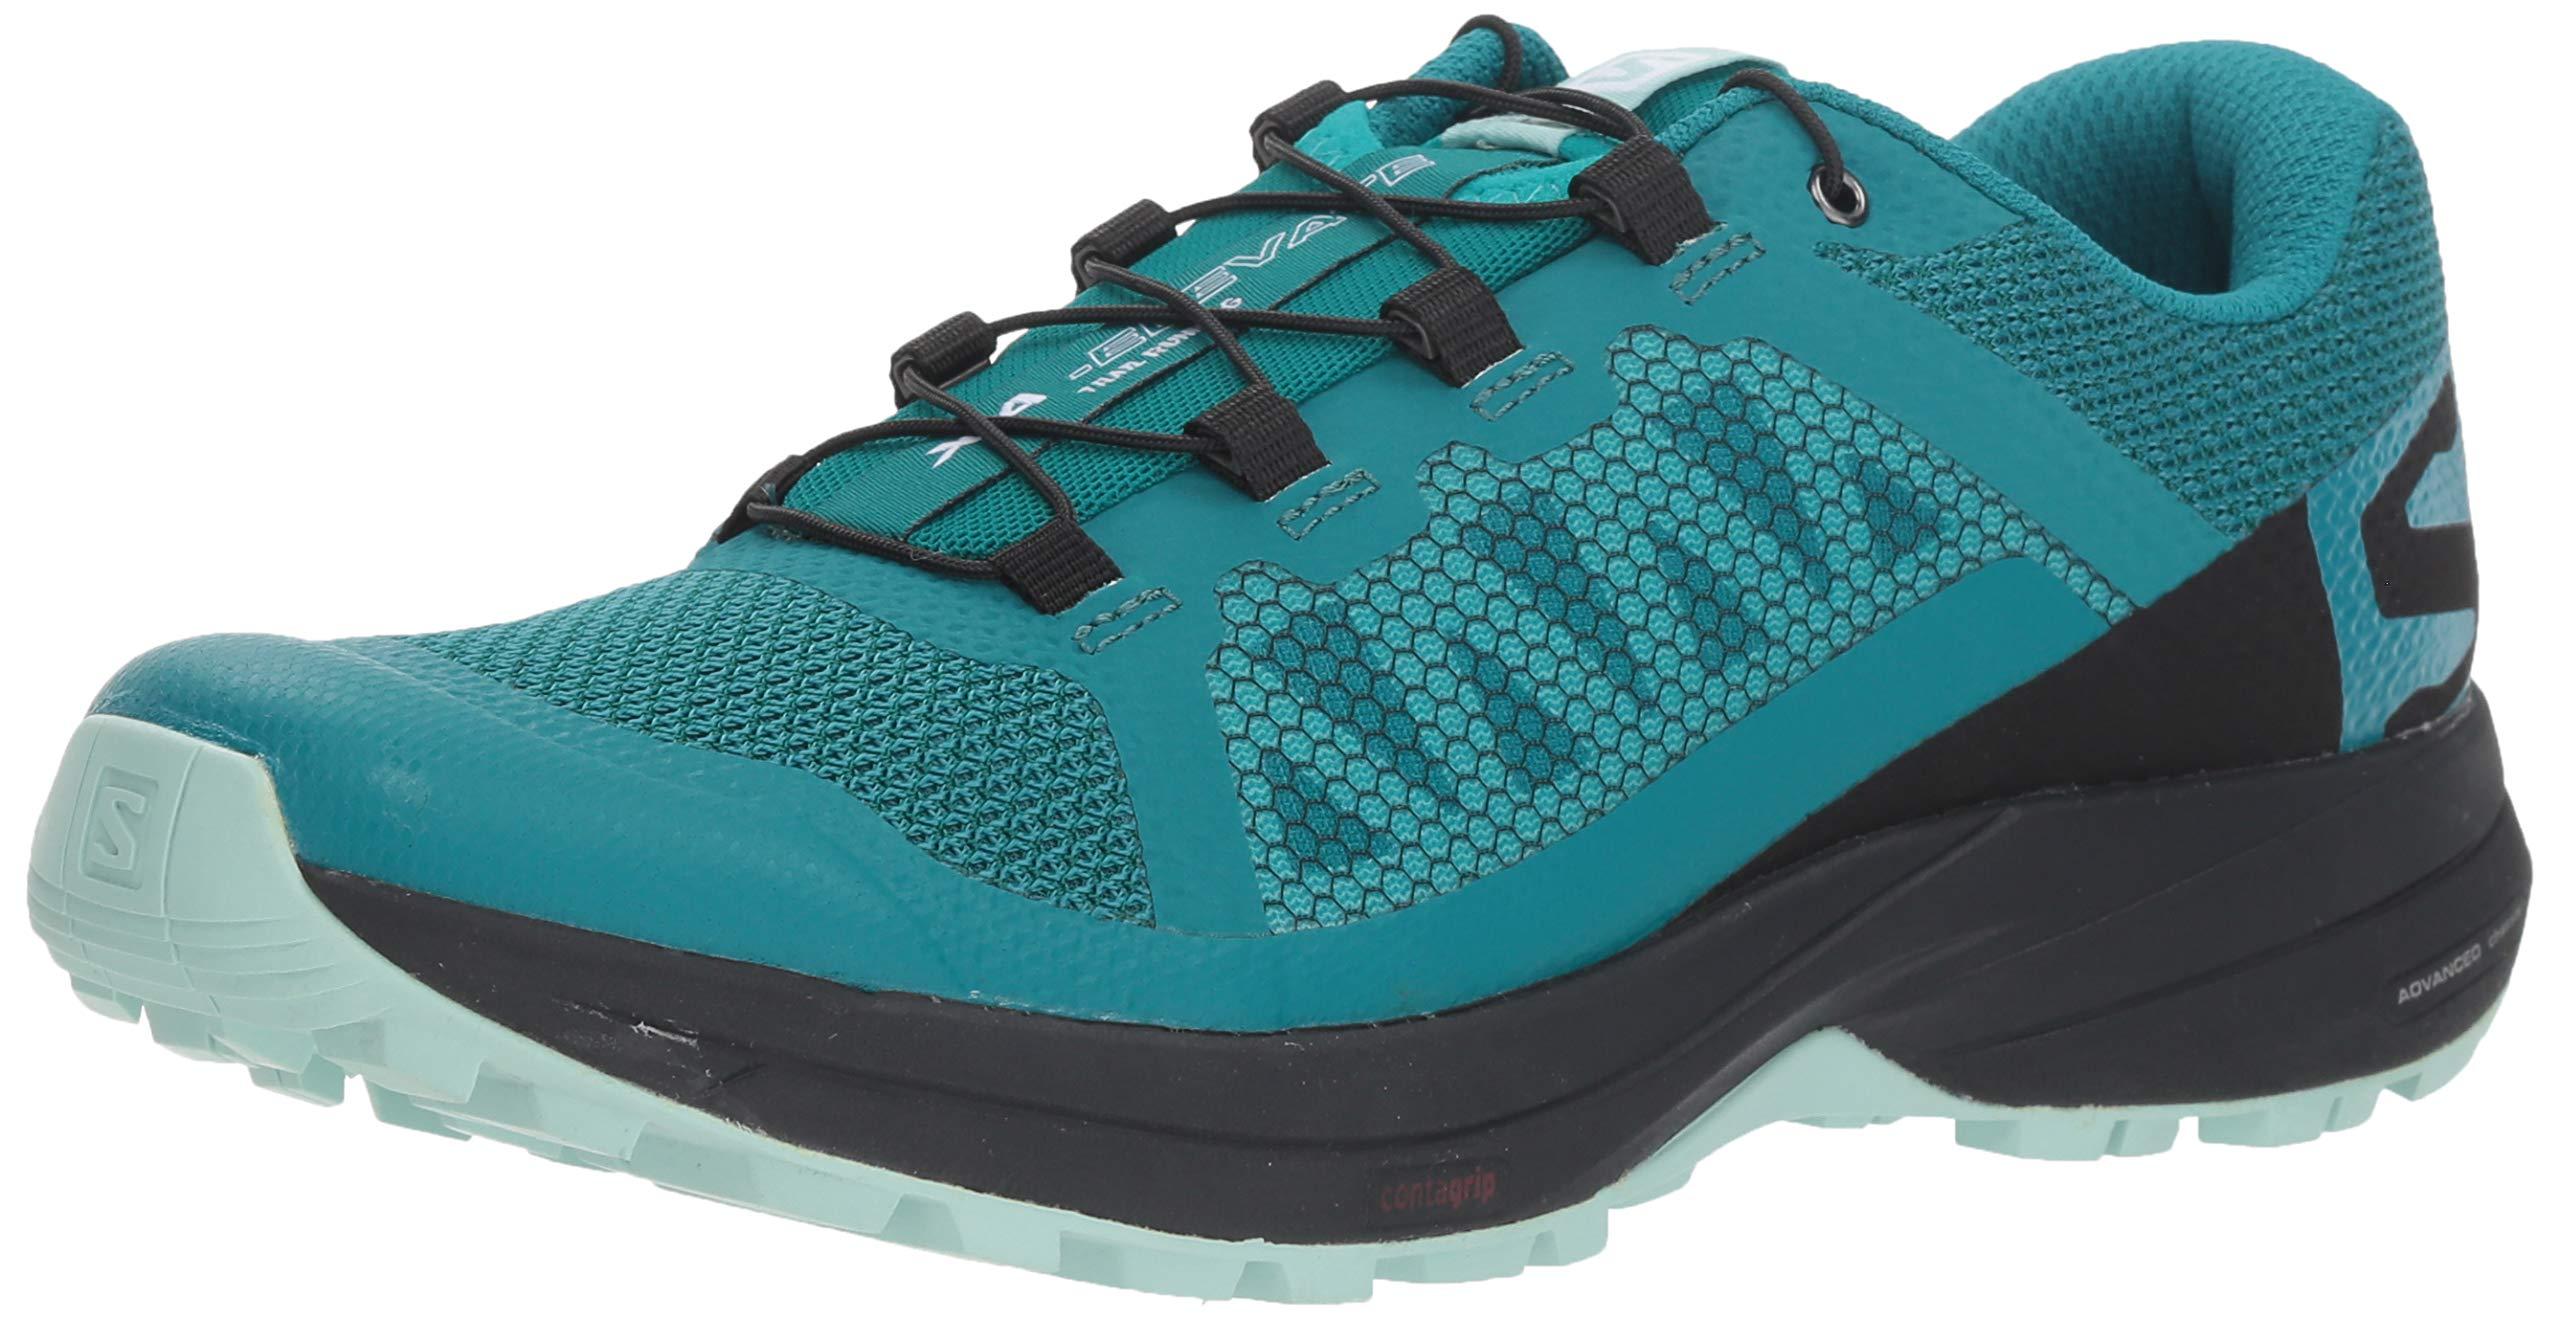 Salomon Mens Xa Elevate GTX Trail Running Shoes - Choose SZ/color | eBay